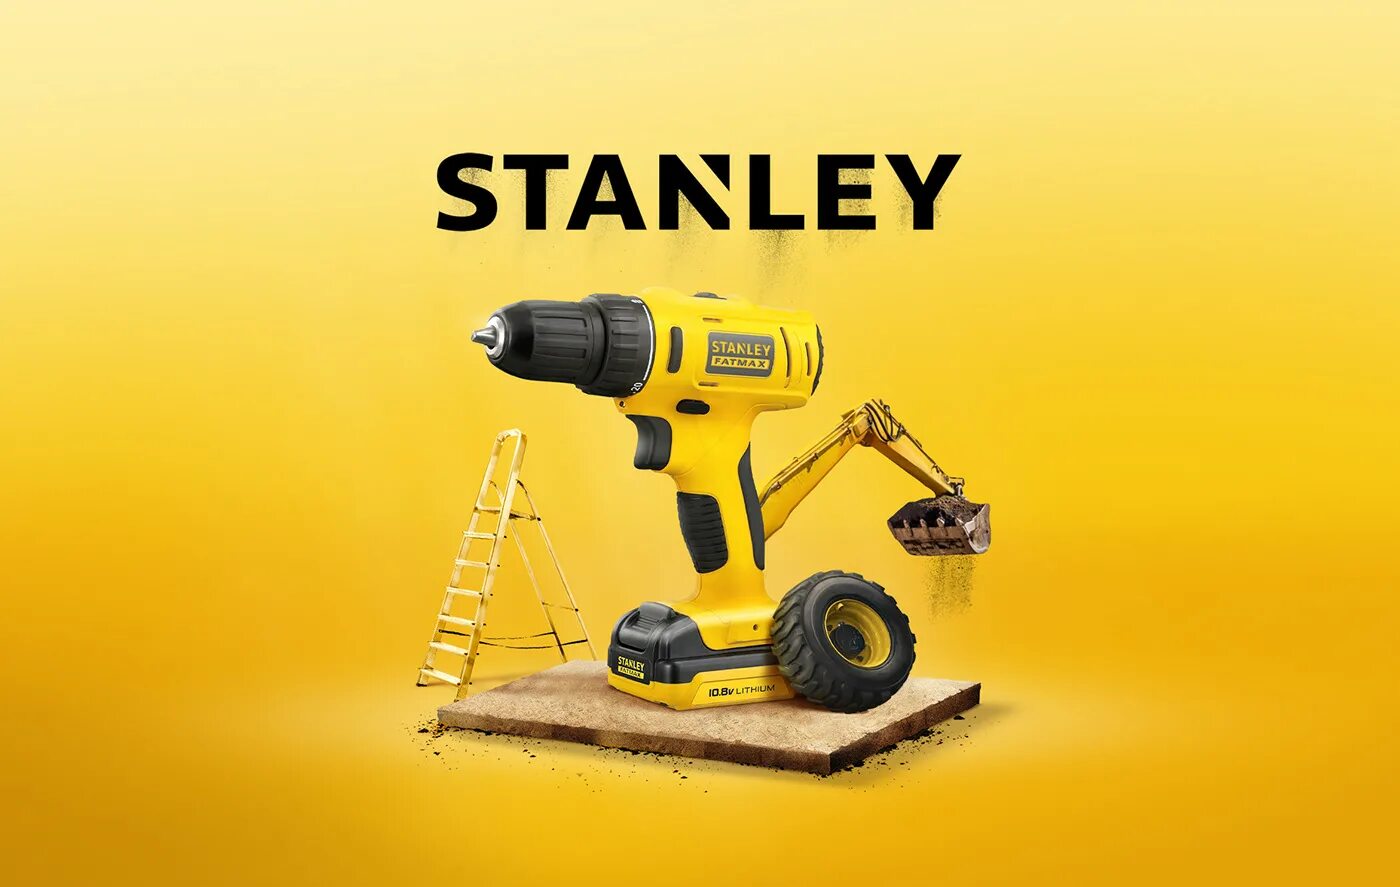 Ads tools. Электроинструменты Stanley. DEWALT баннер. Реклама инструментов Stanley. Инструмент DEWALT реклама.